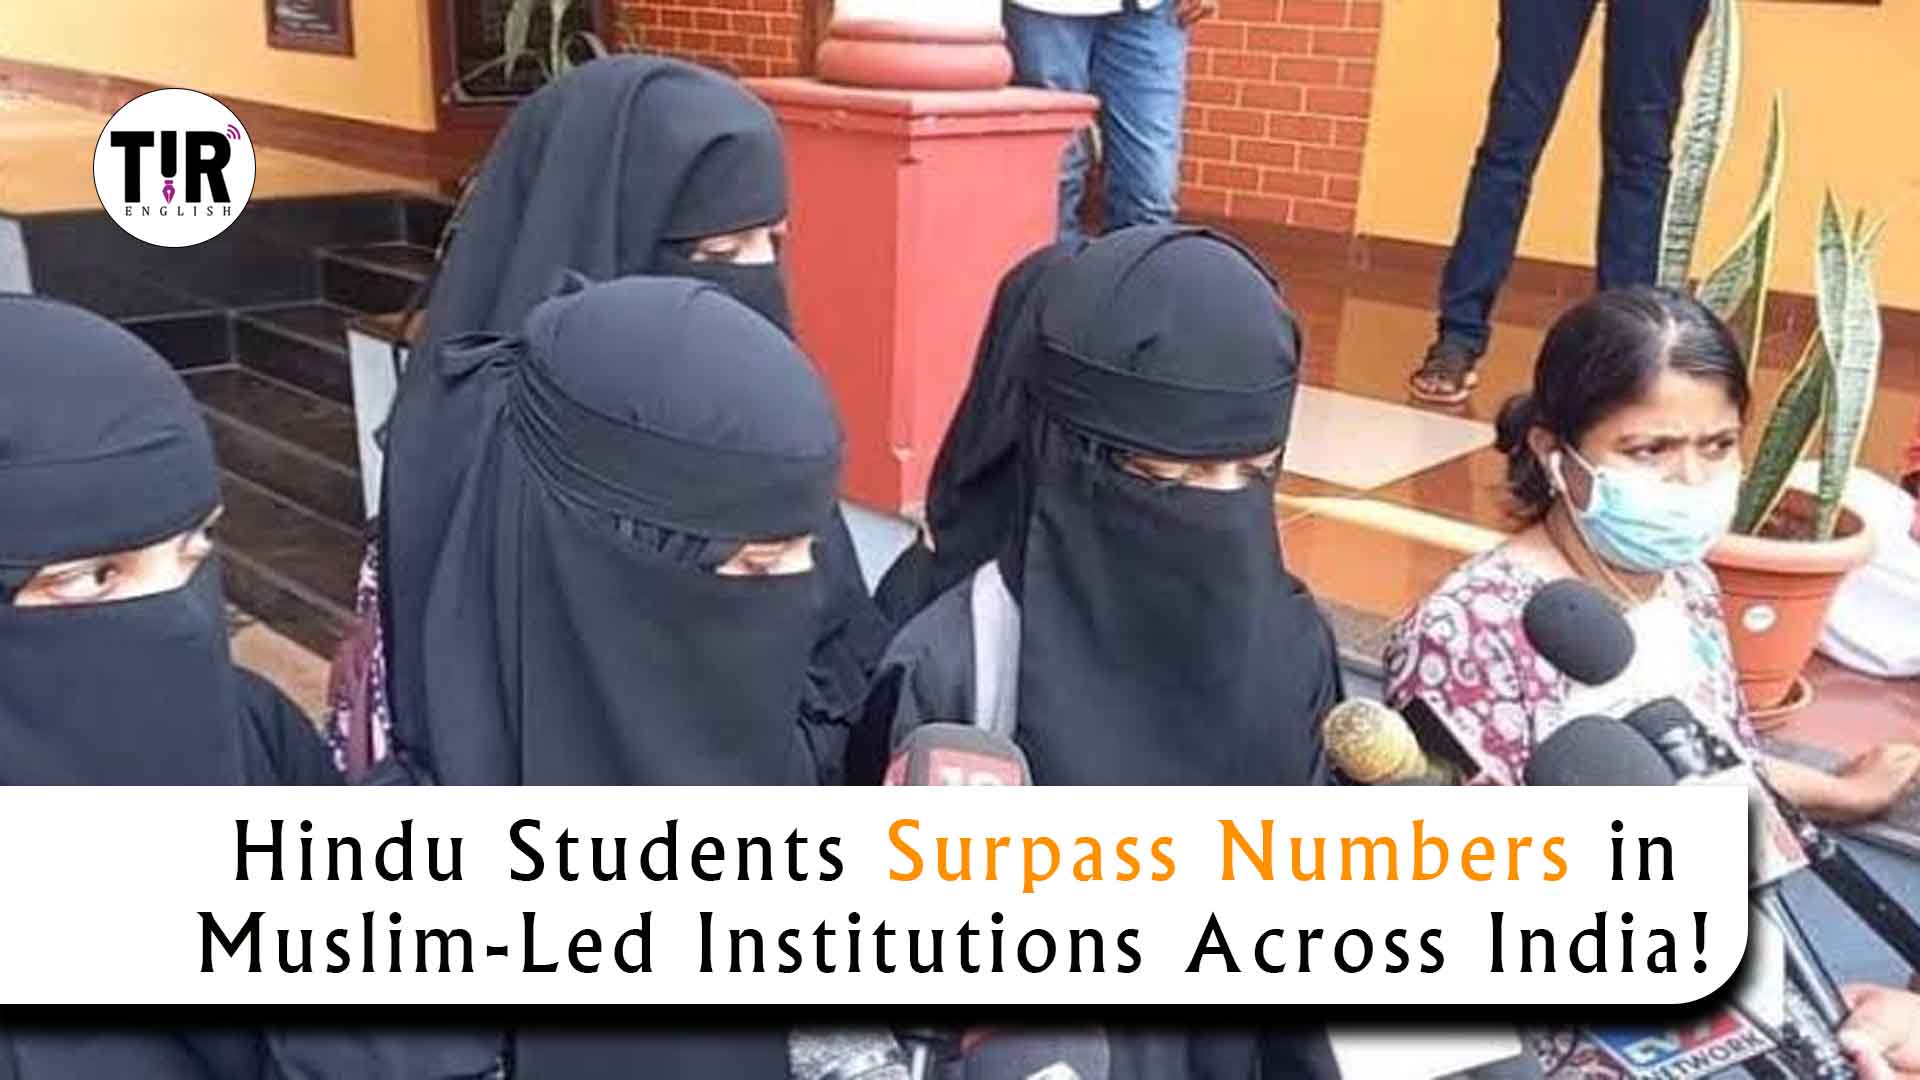 Surprising Demographics: Hindu Students Surpass Numbers in Muslim-Led Institutions Across India!